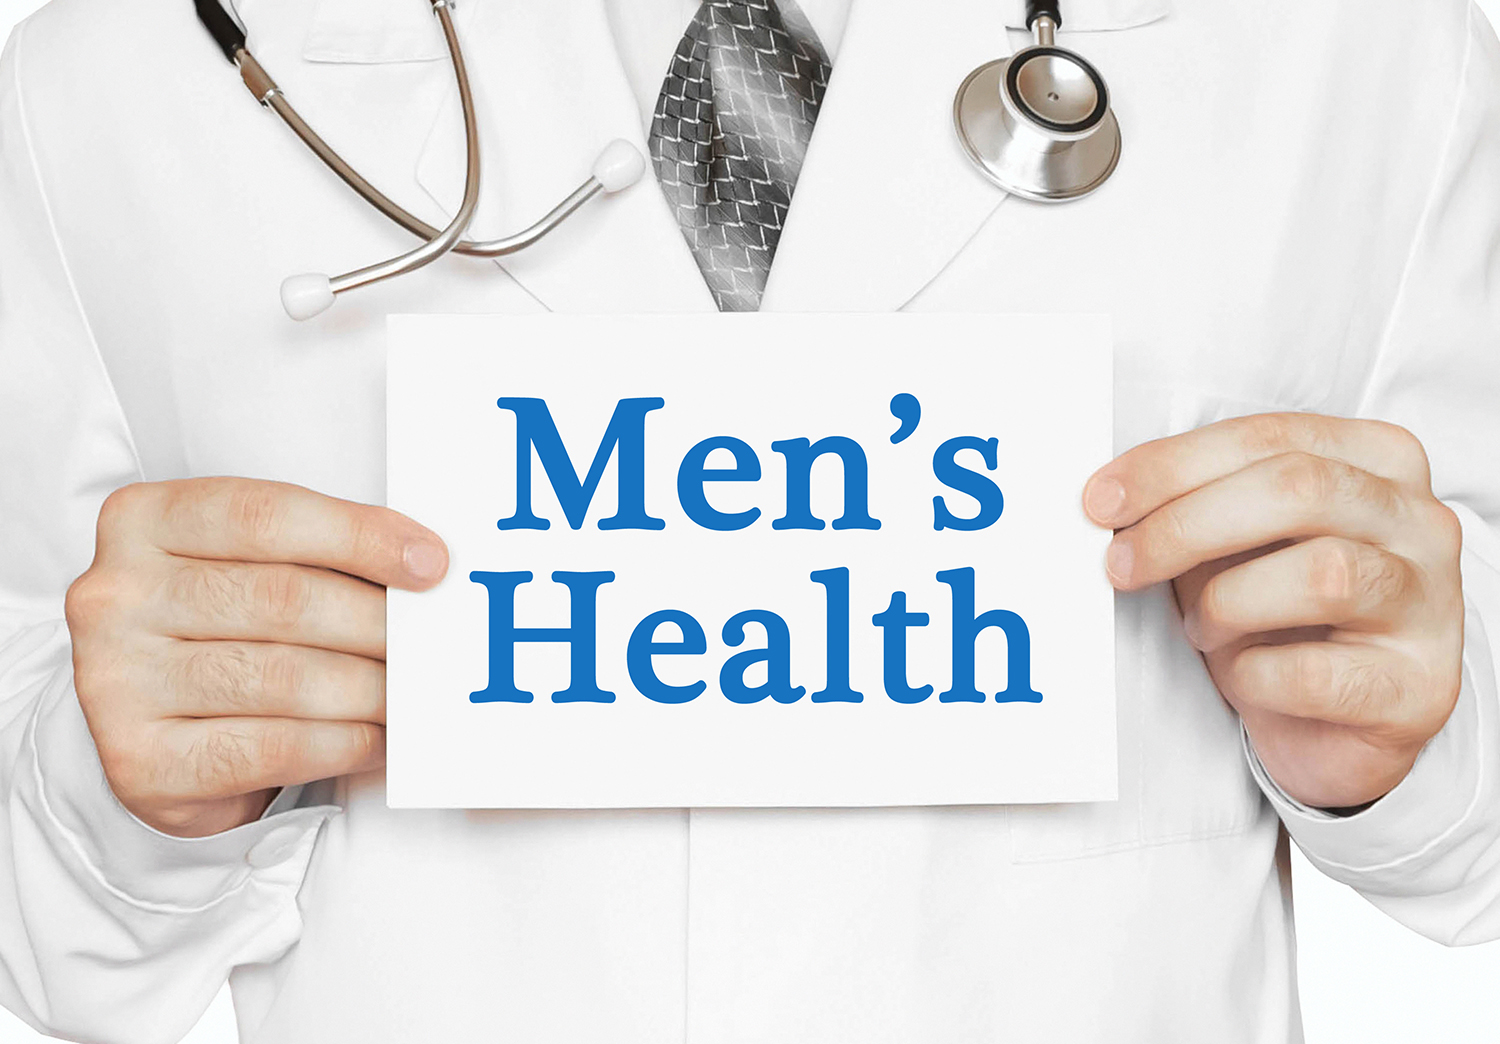 Men’s Health card in hands of Medical Doctor